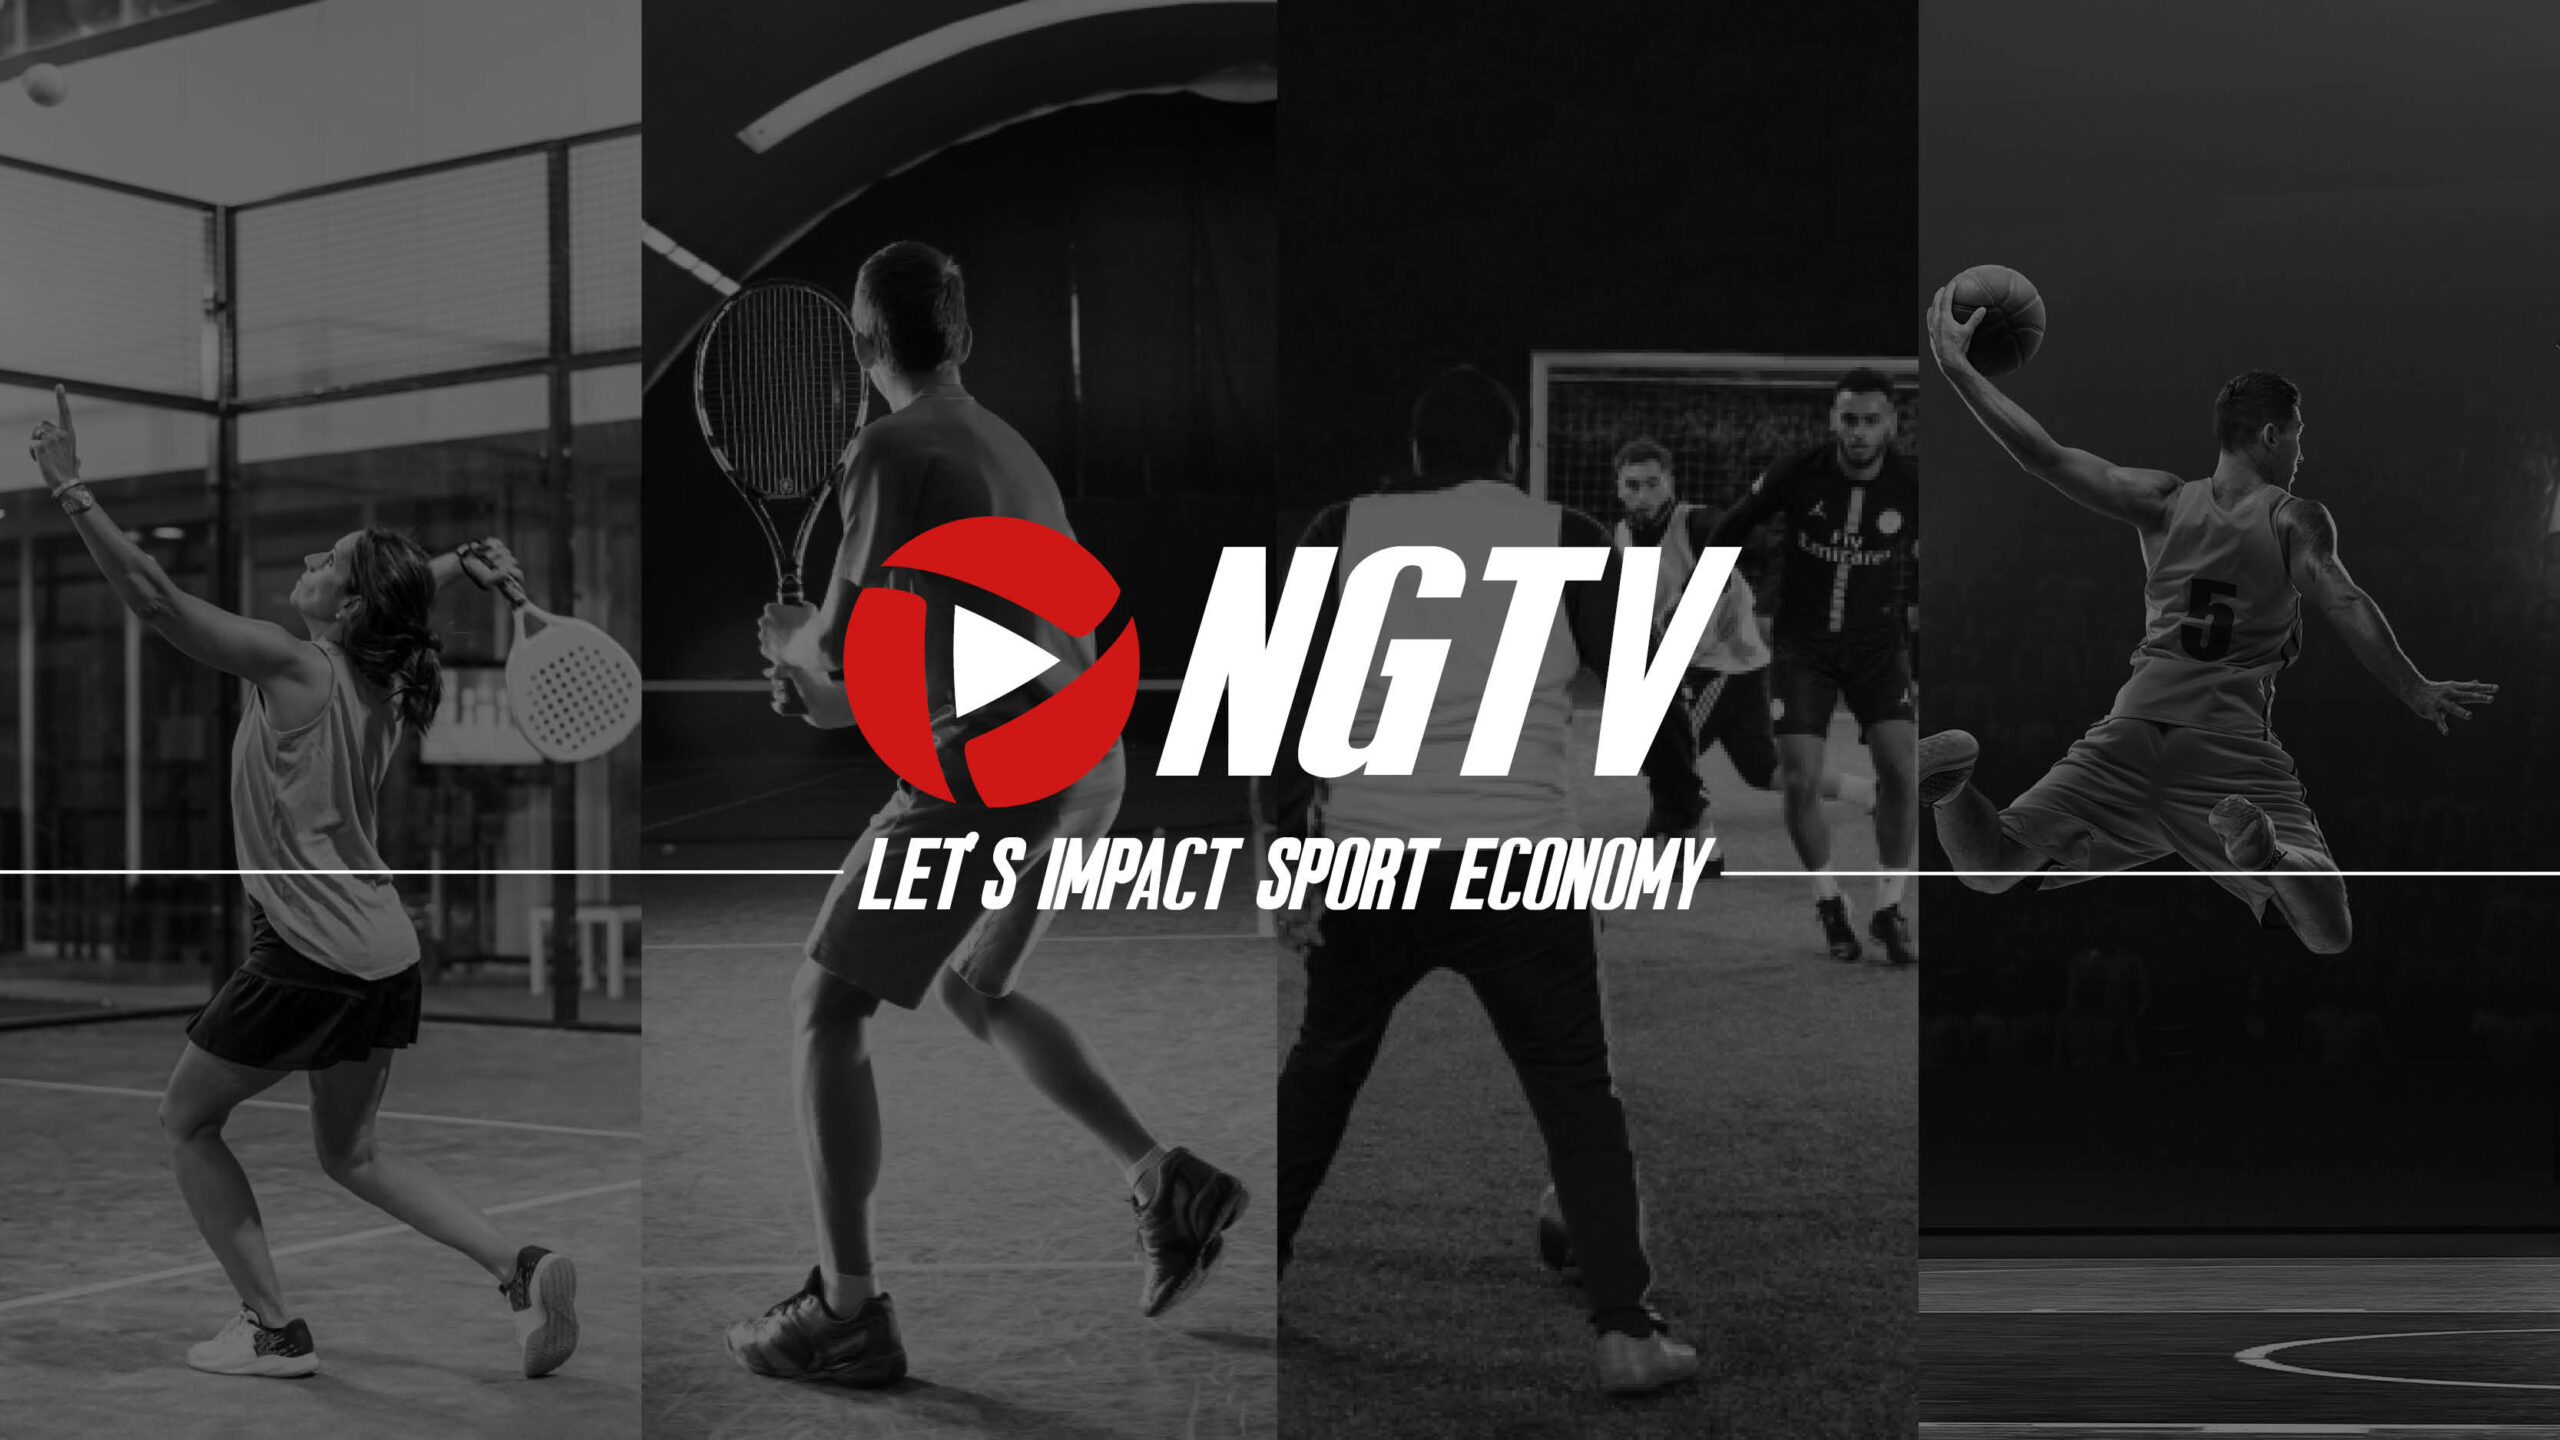 NGTV’s Goal: Impact the Sports Economy!